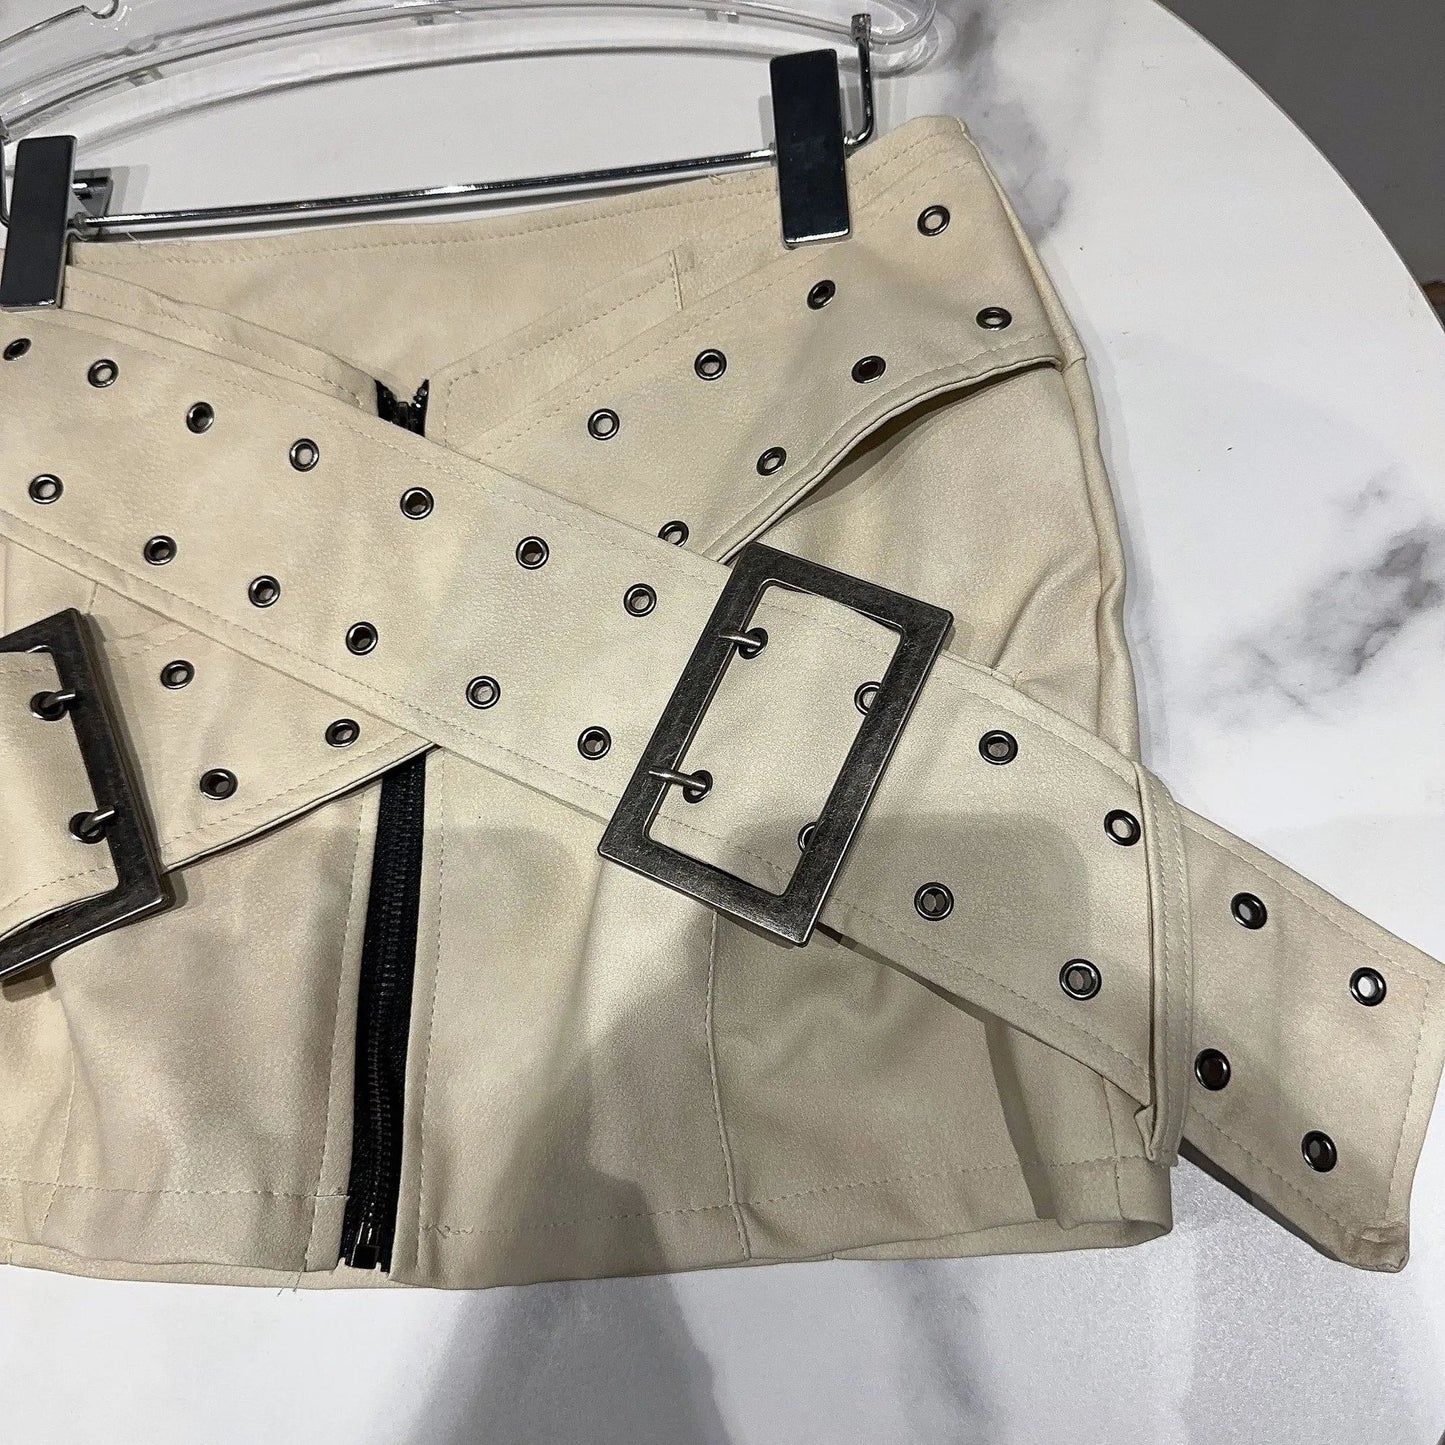 Criss-cross Belt Leather Skirt Fashion Closet Clothing